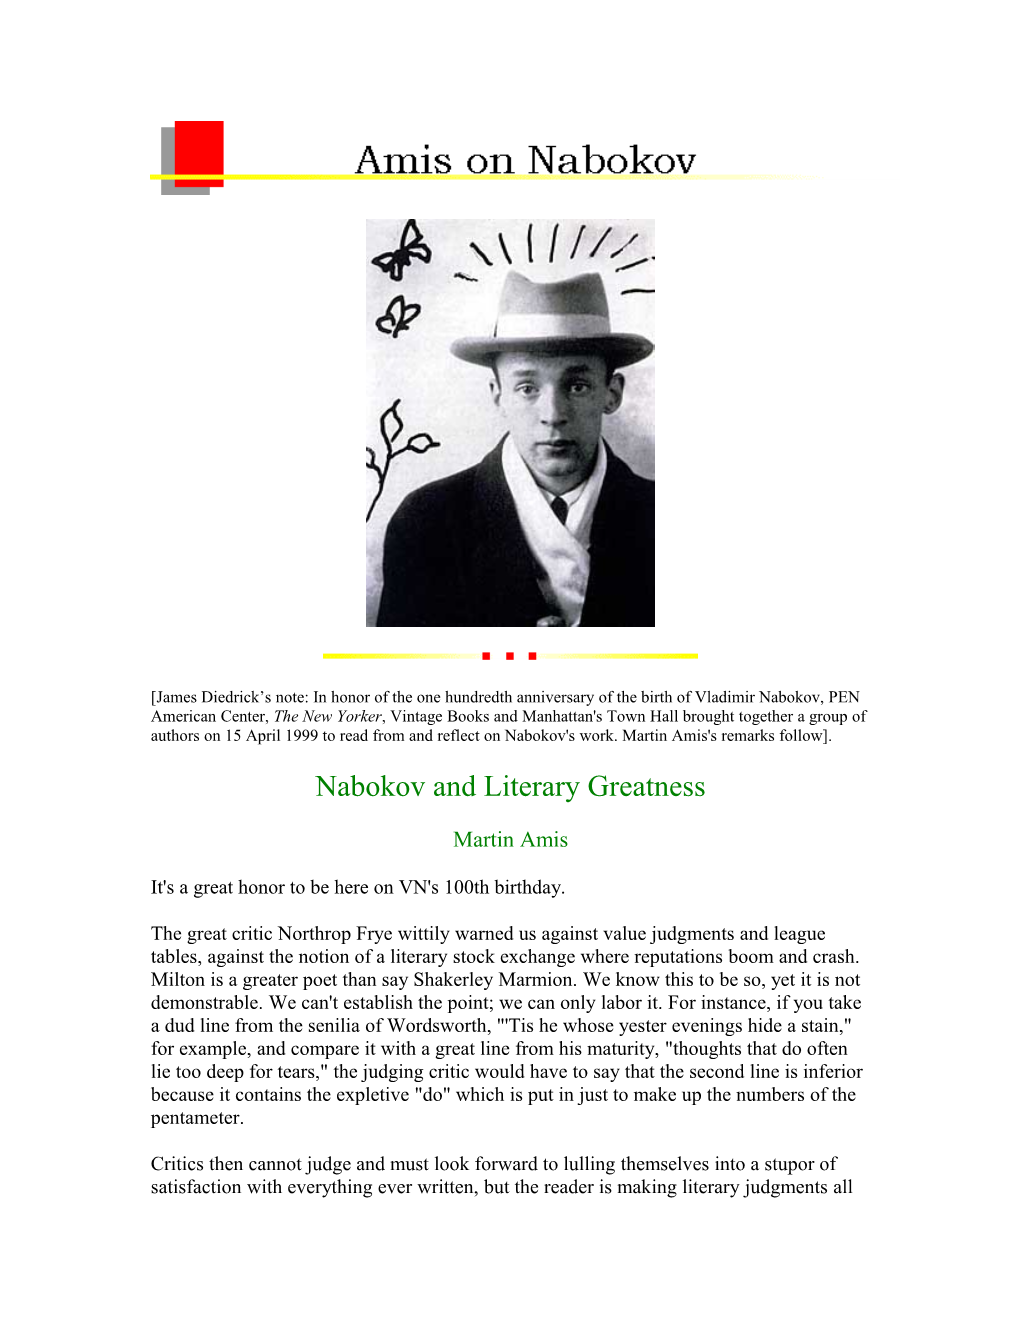 Nabokov and Literary Greatness